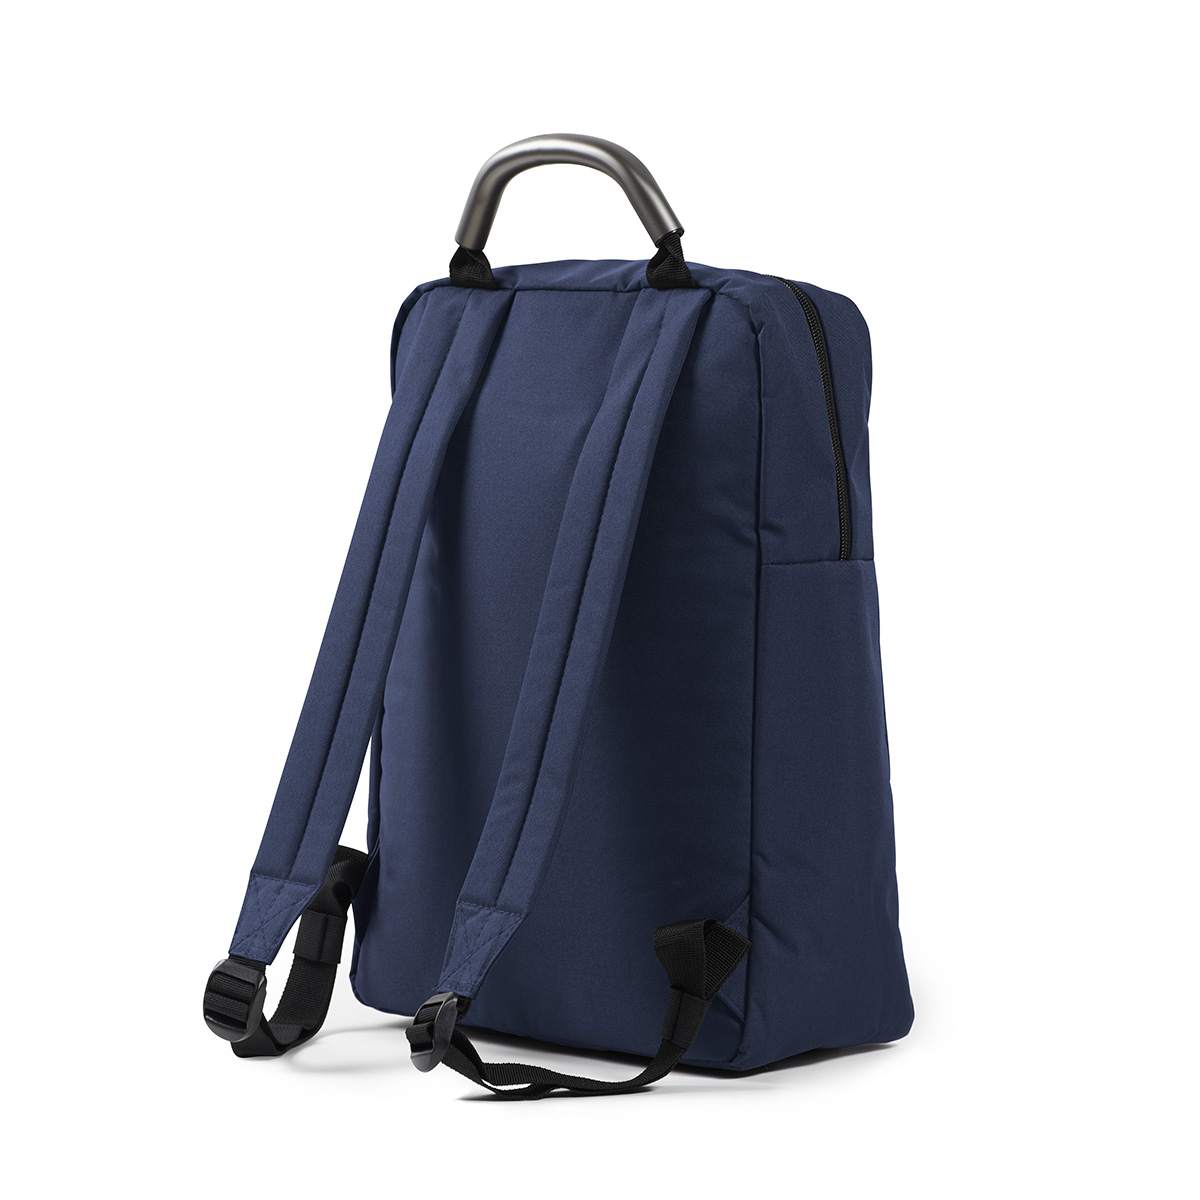 Tera Gym Bag - Lexon - Double compartment backpack